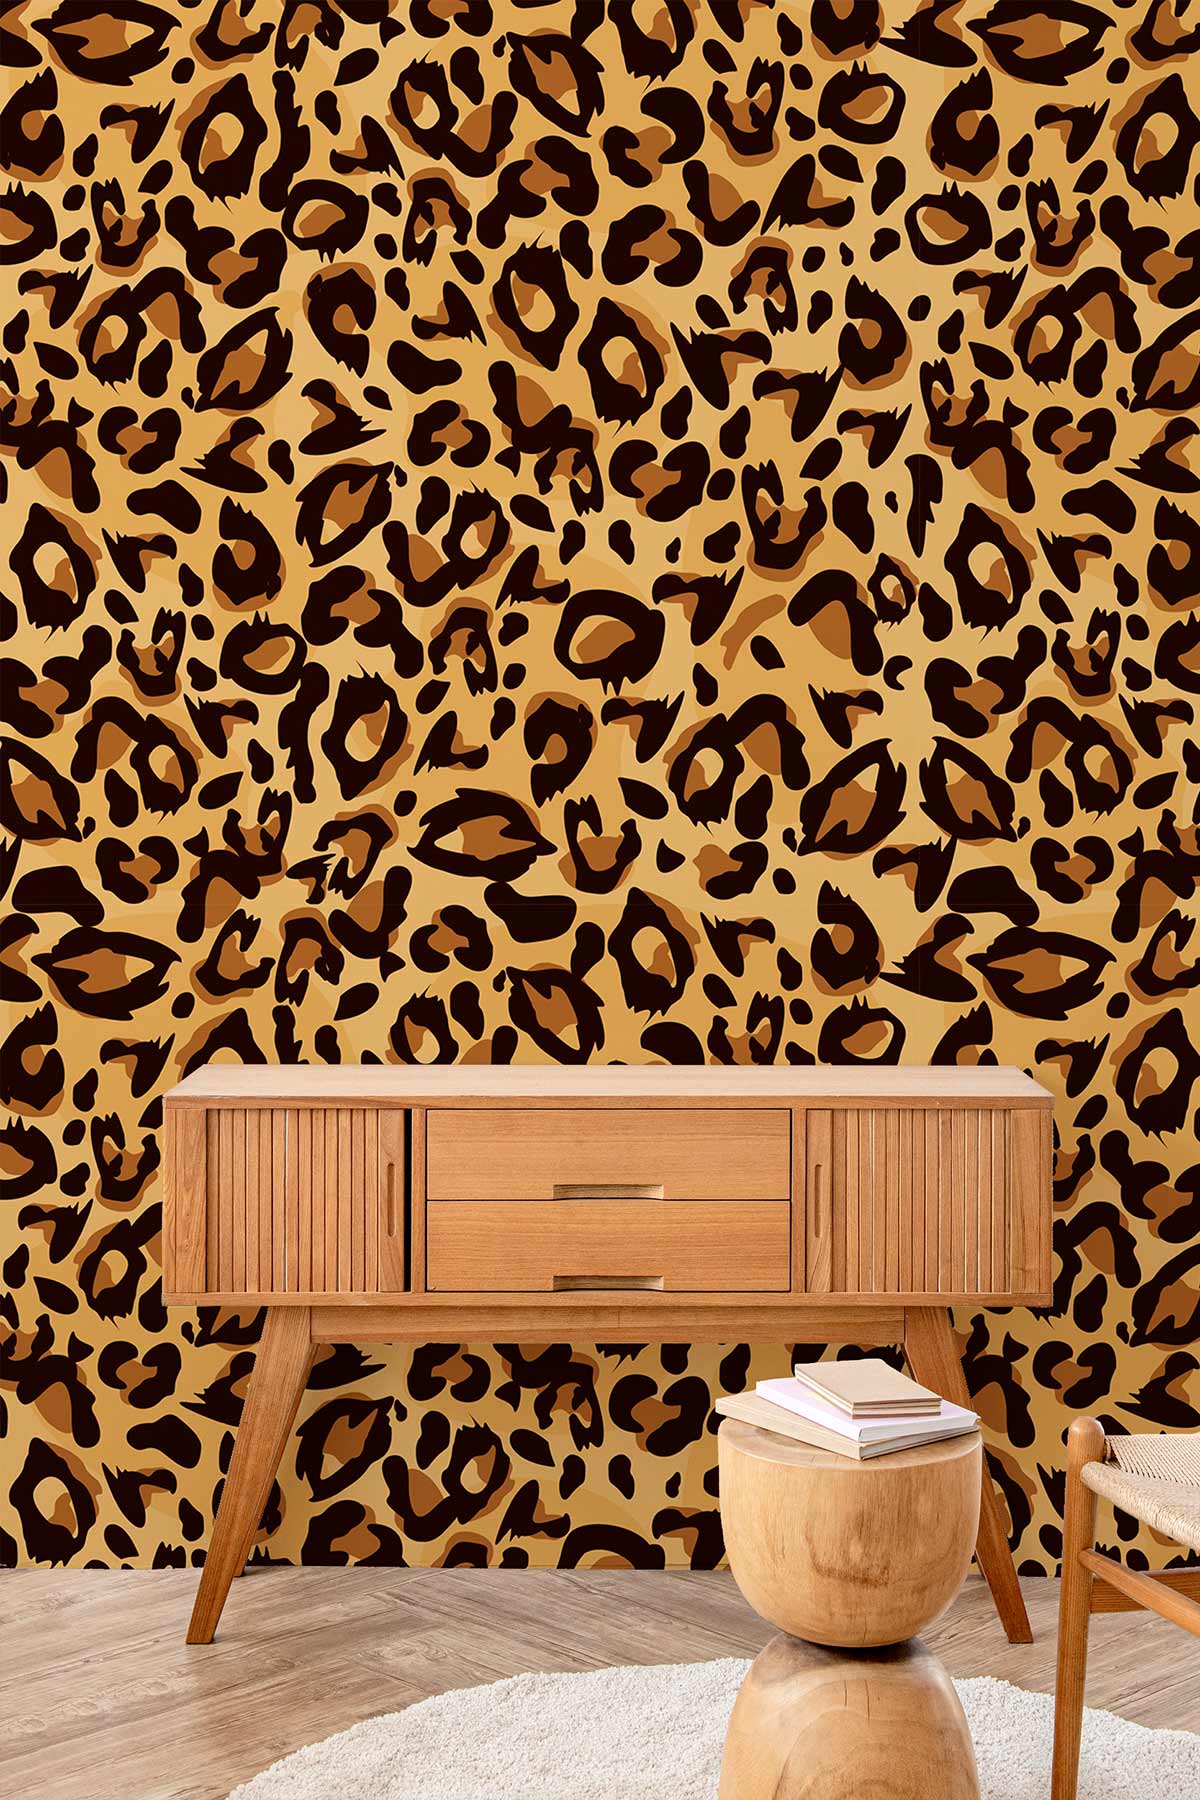 Leopard Print Vector Animal Skin Wallpaper Mural Home Interior